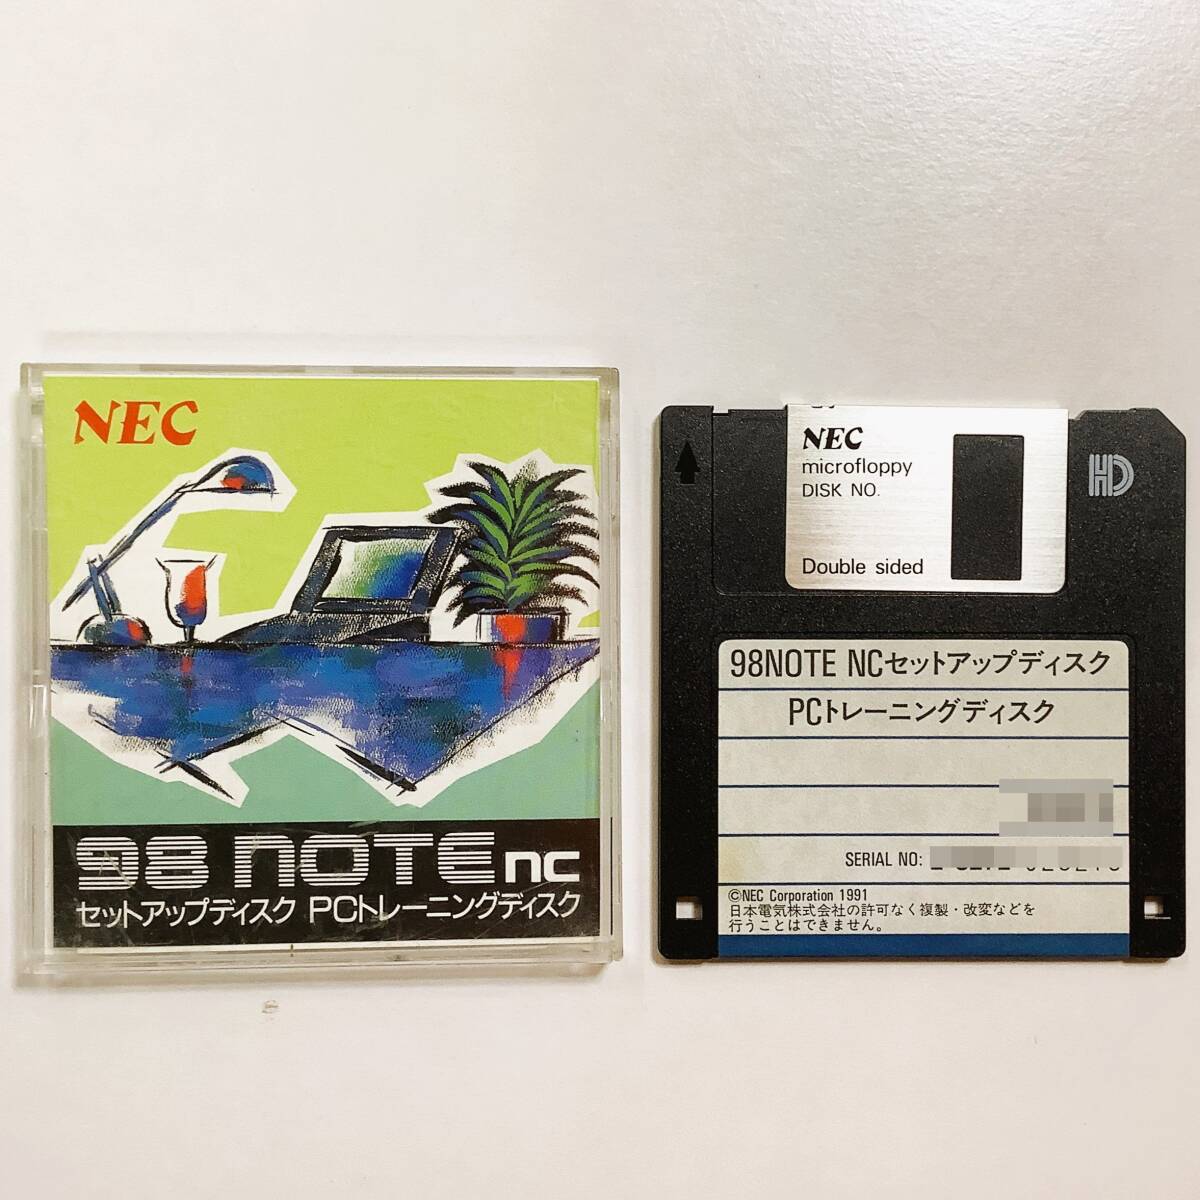 NEC 98NOTE NC セットアップディスク PCトレーニングディスク 3.5インチ フロッピーディスク 3.5FDの画像1